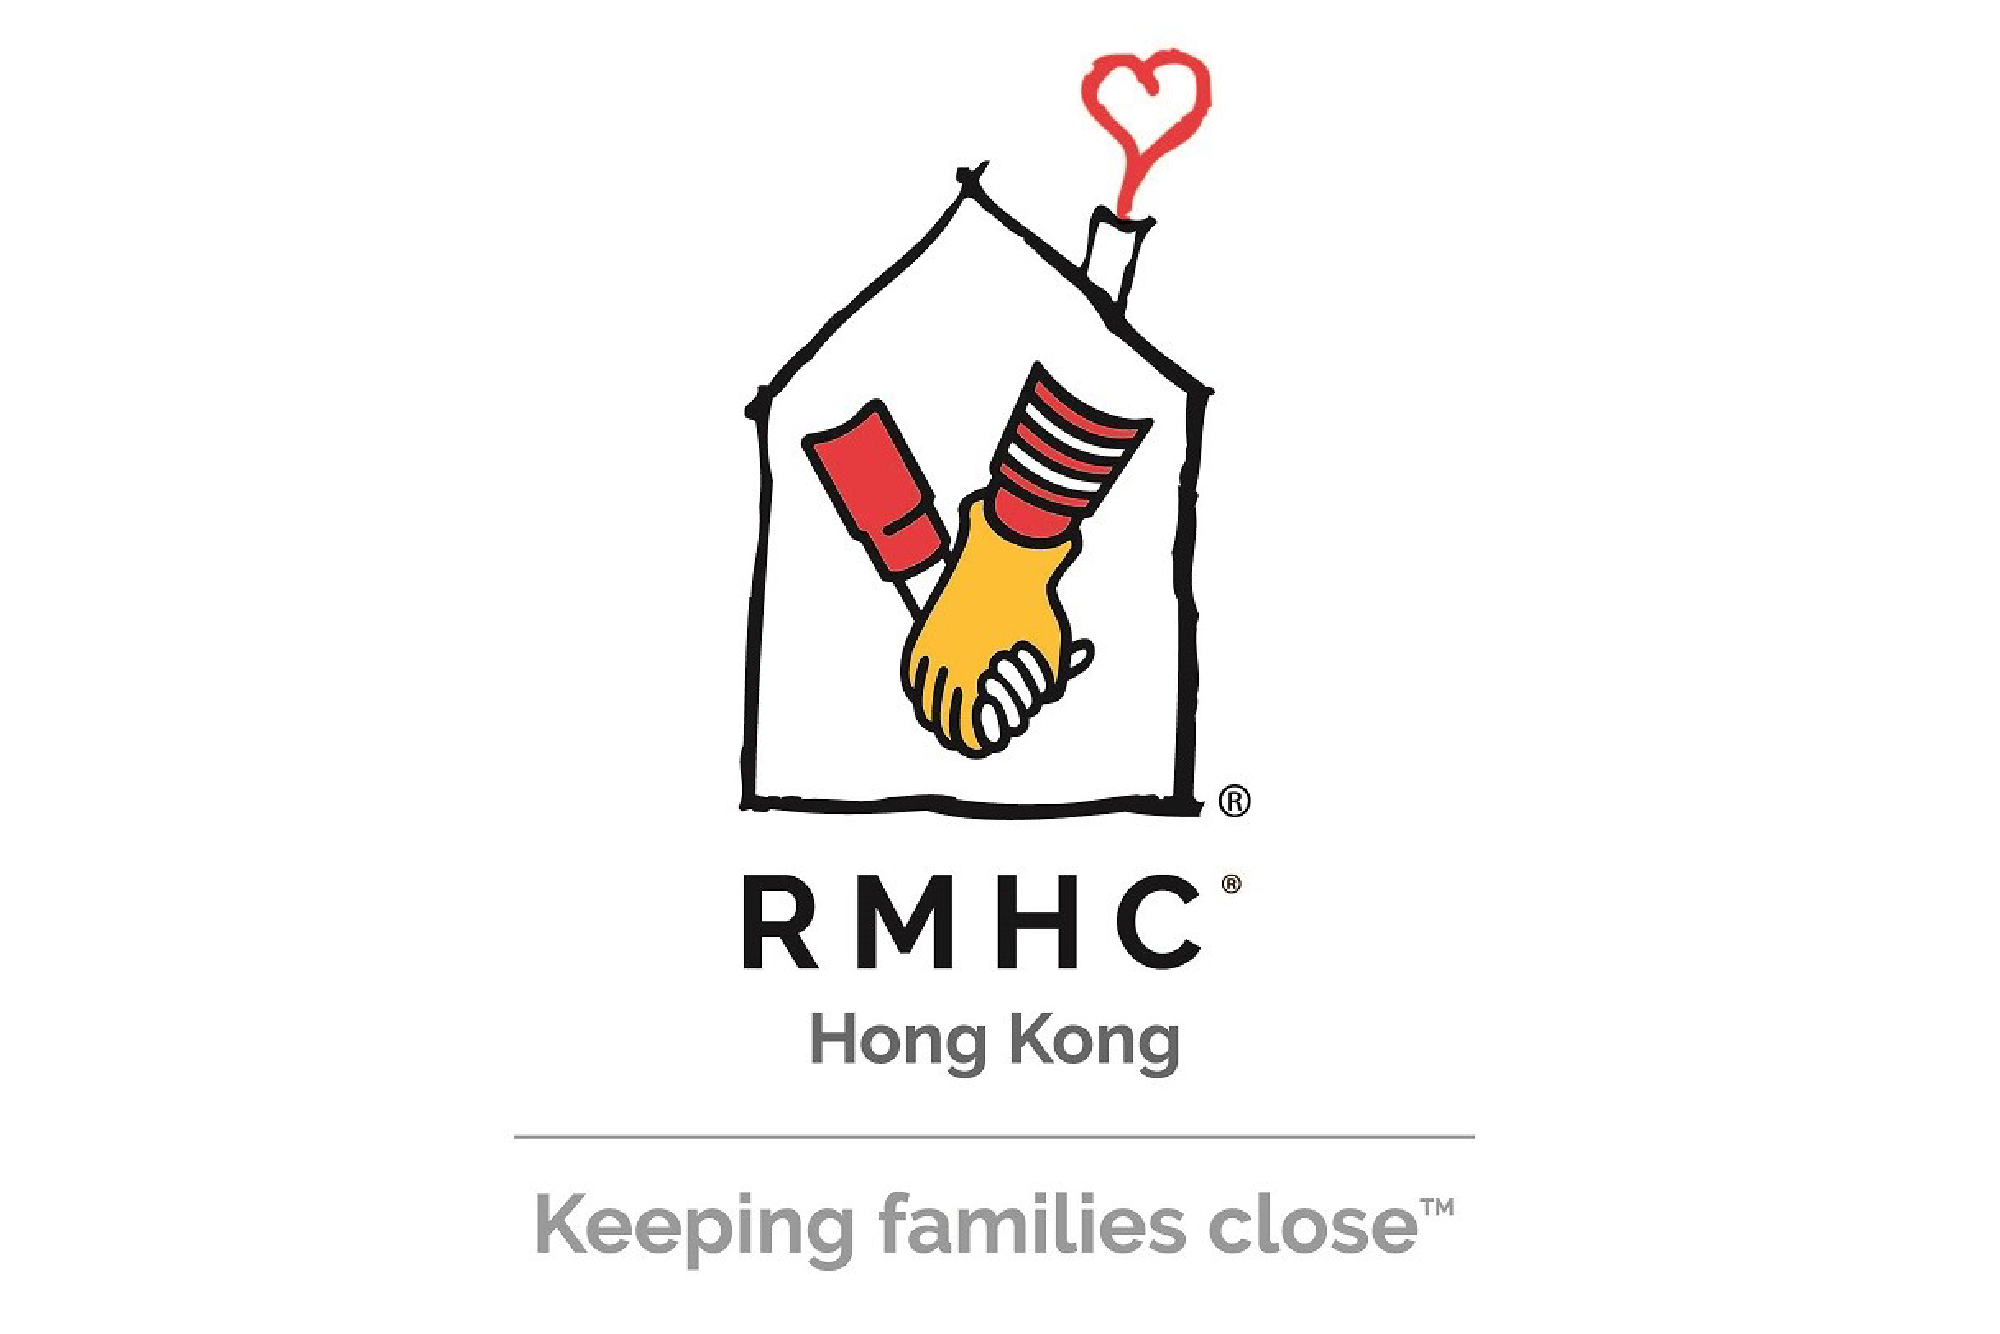 麥當勞叔叔之家慈善基金有限公司 RONALD MCDONALD HOUSE CHARITIES HONG KONG LIMITED